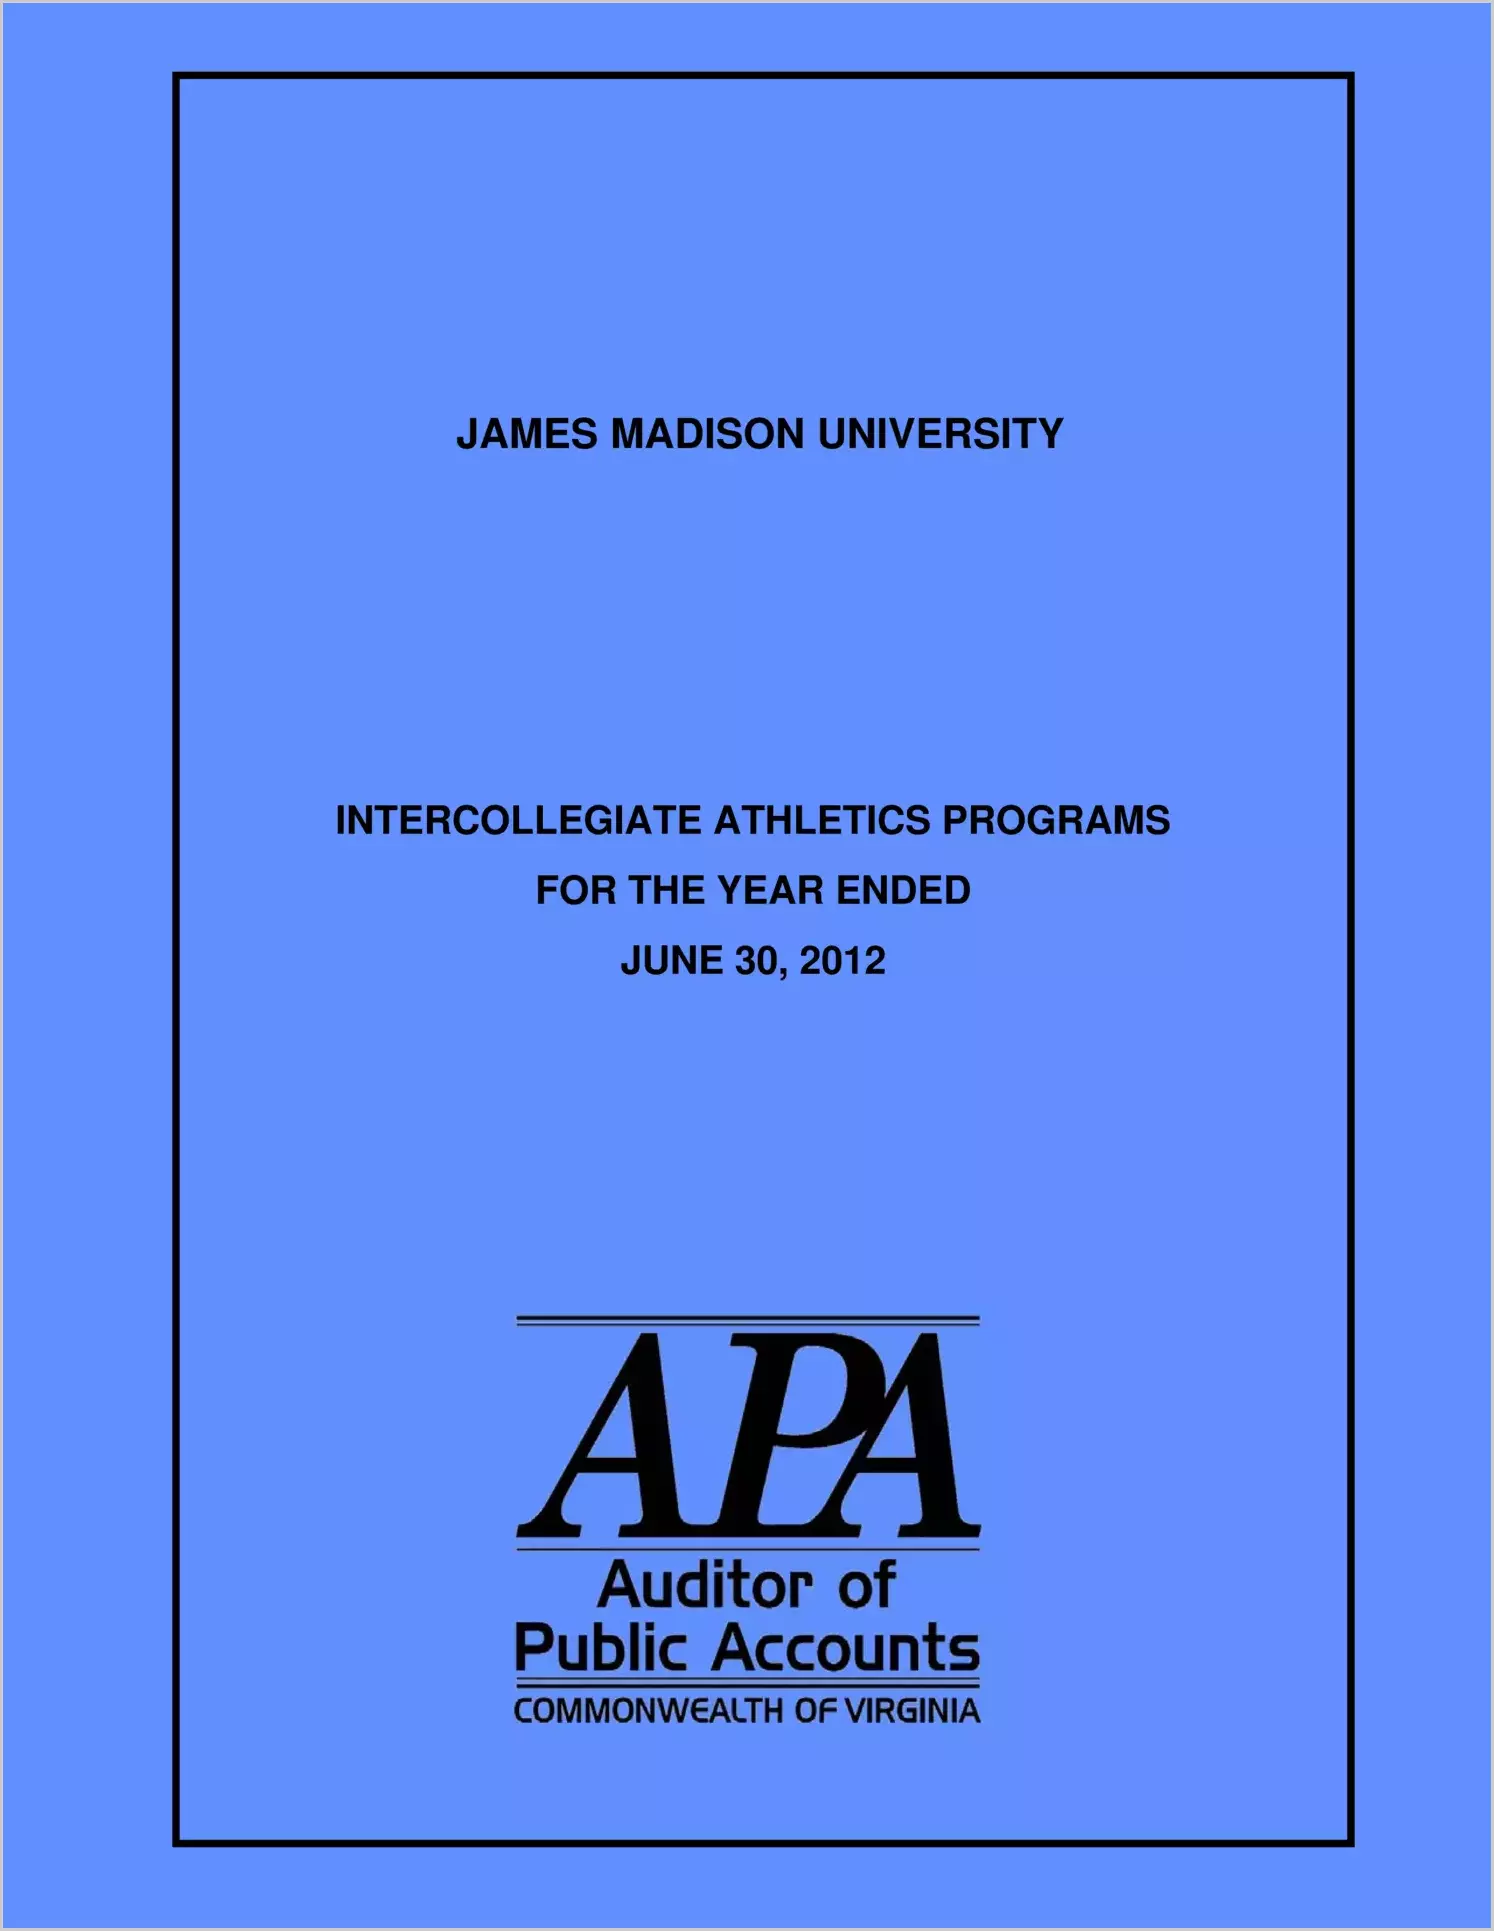 James Madison University Intercollegiate Athletics Programs for the year ended June 30, 2012